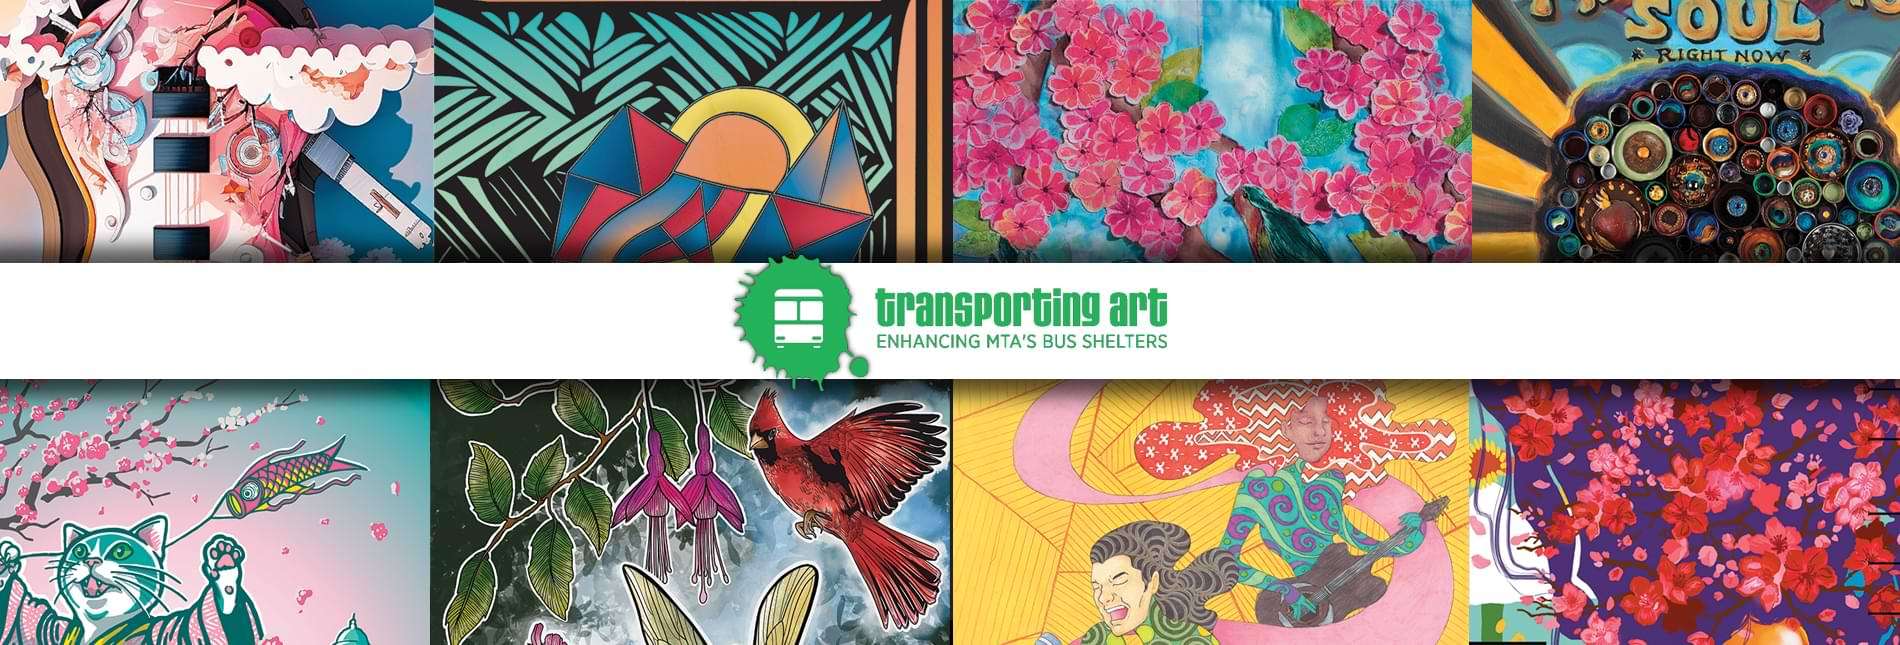 MTA's Transporting Art program art